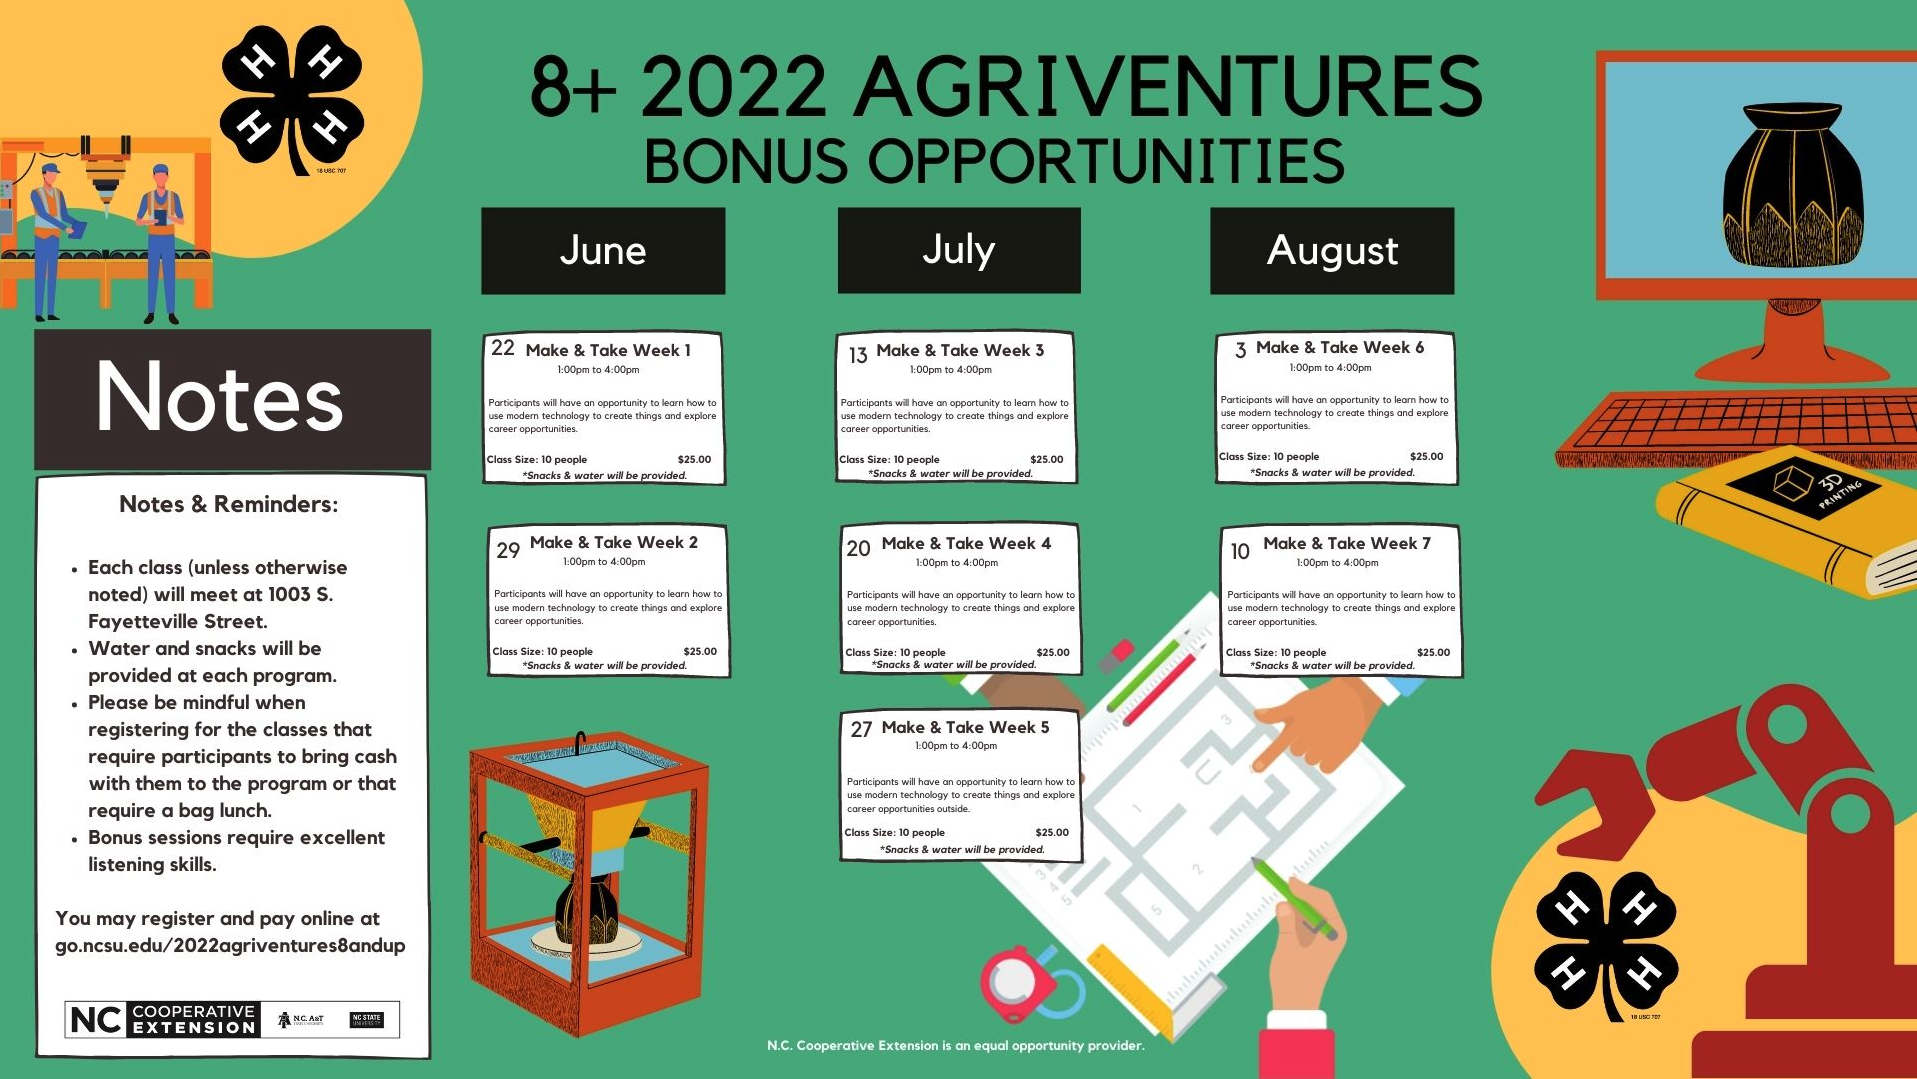 2022 Agriventures Bonus Opportunities calendar for 8+ year olds